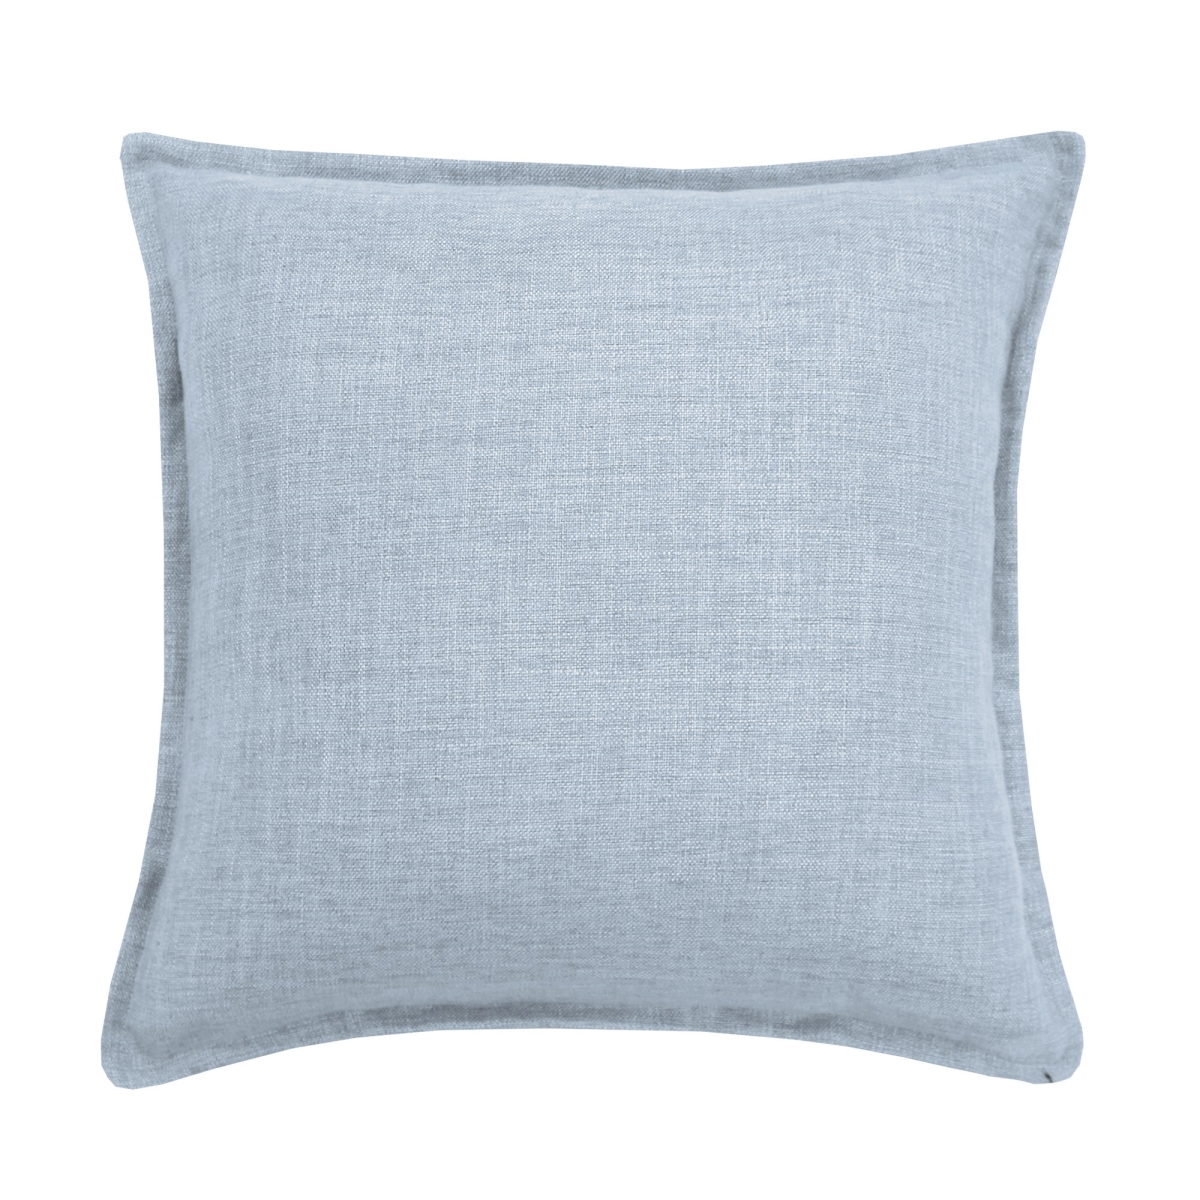 Sq-pi-liblu-1818 18 X 18 In. Linen Decorative Cushion, Blue - 100 Percent Polyester